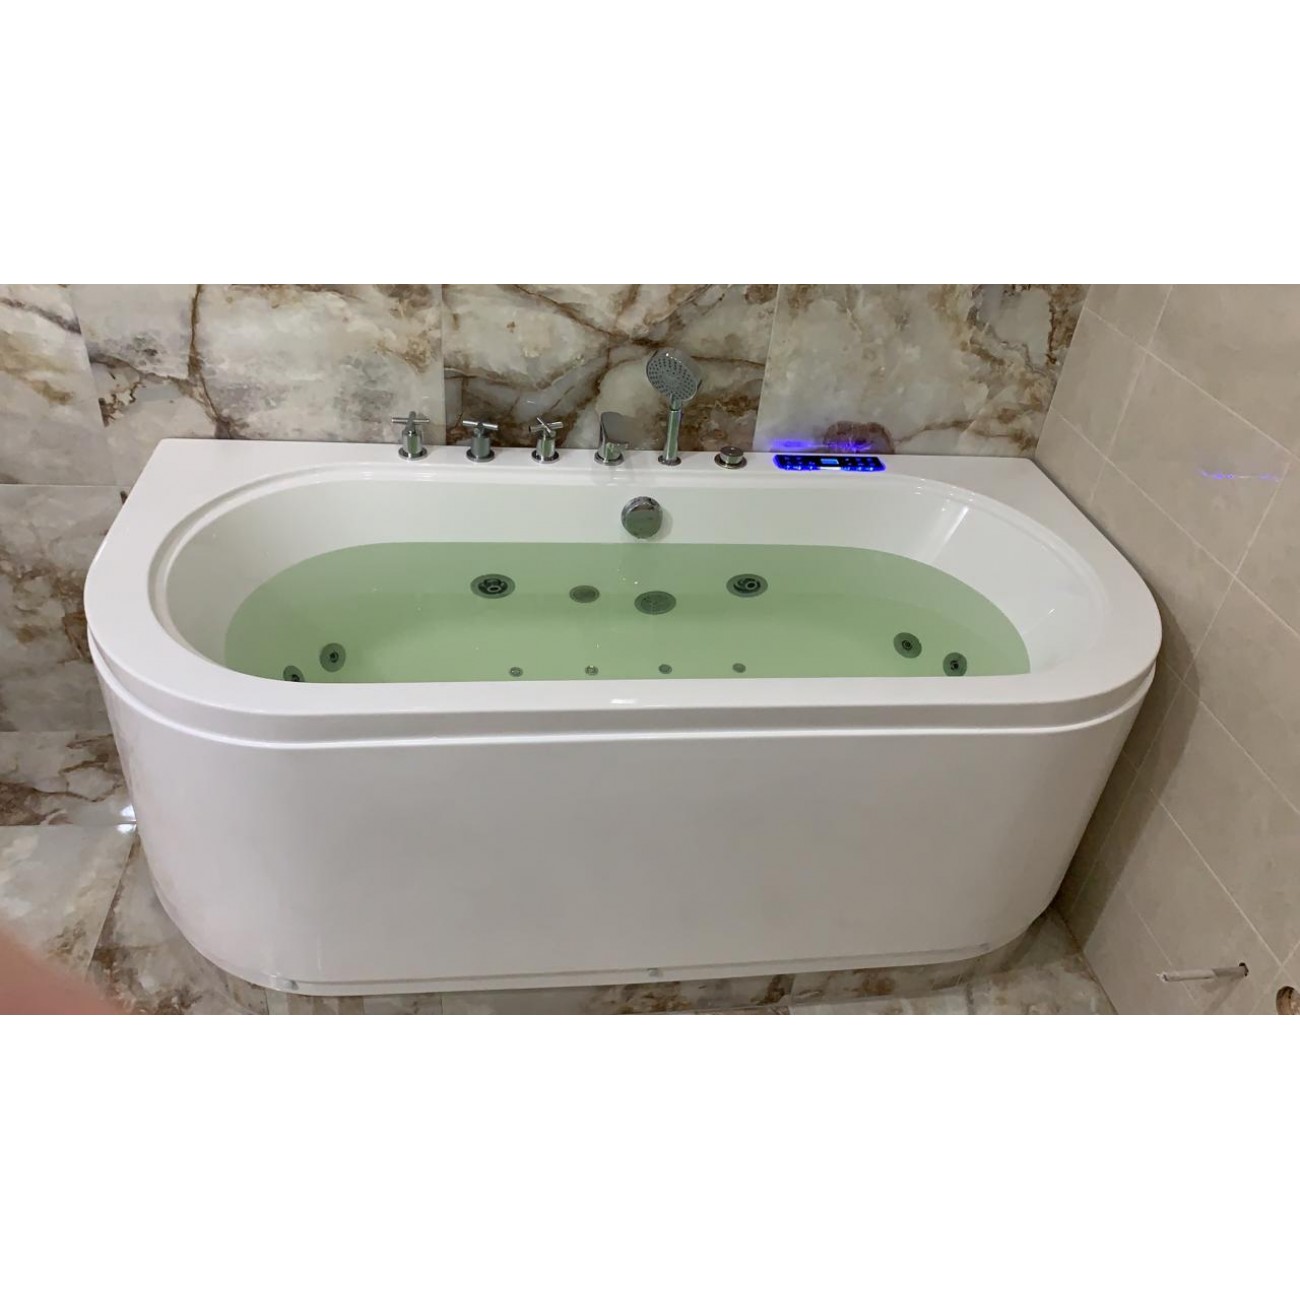 Гидромассажная ванна Frank 170x80 F160 пристенная, белая, размер 170x80, цвет белый 20156060 - фото 2